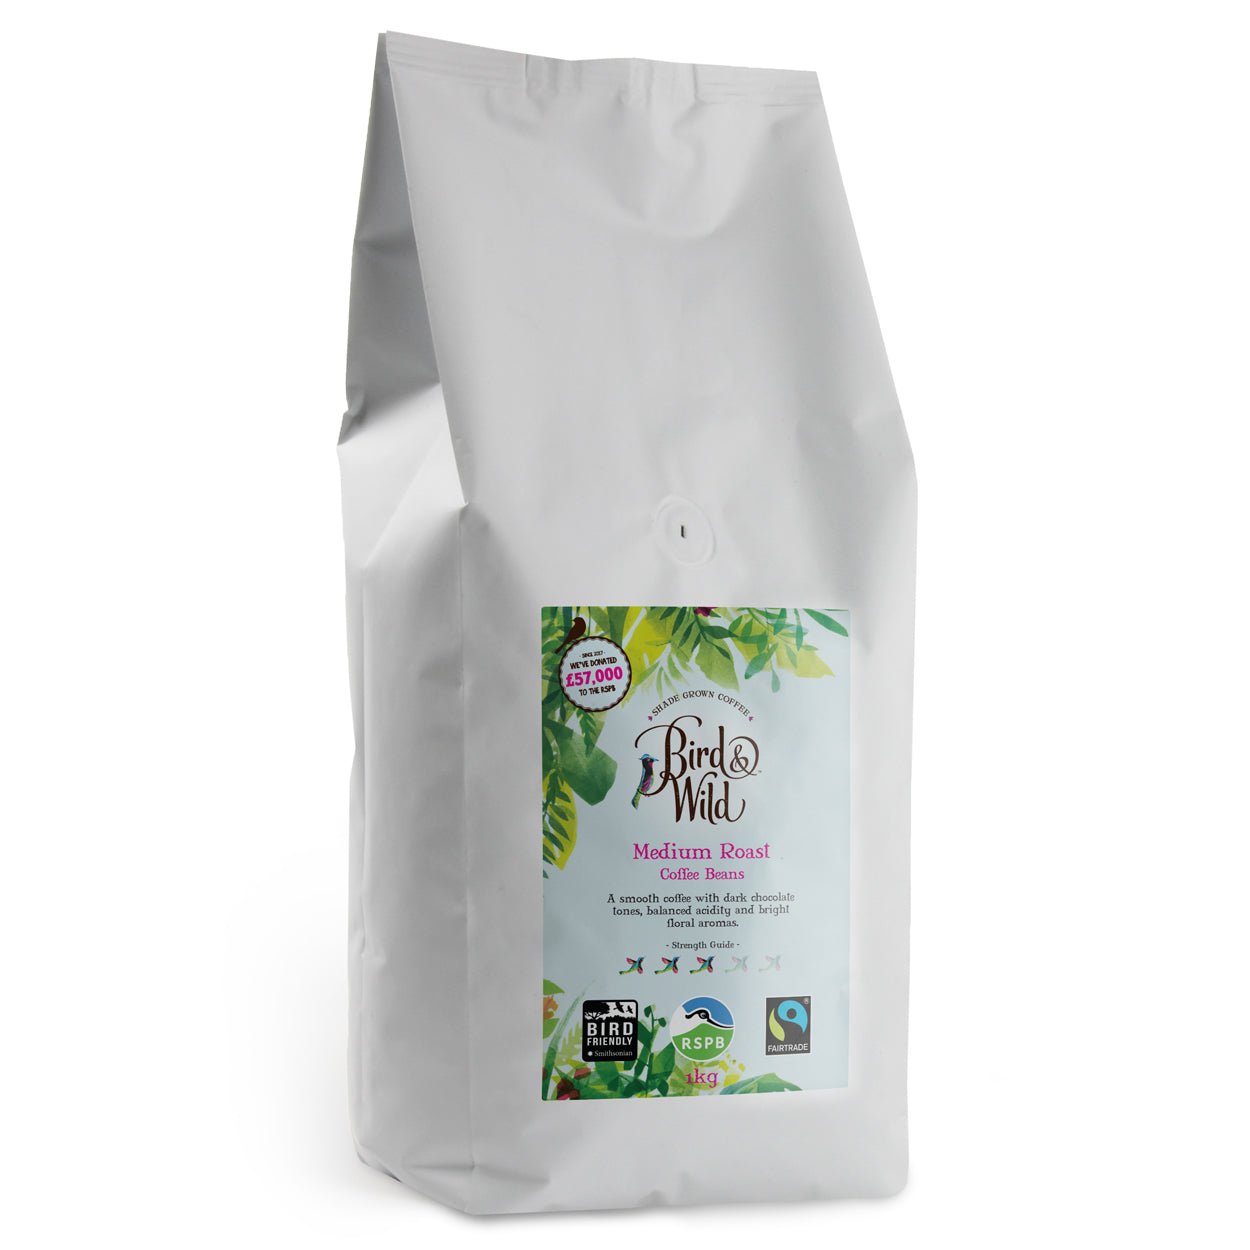 Medium Roast Organic Coffee Beans - CASE OF 6 x 1kg BAGS - Bird & Wild Coffee